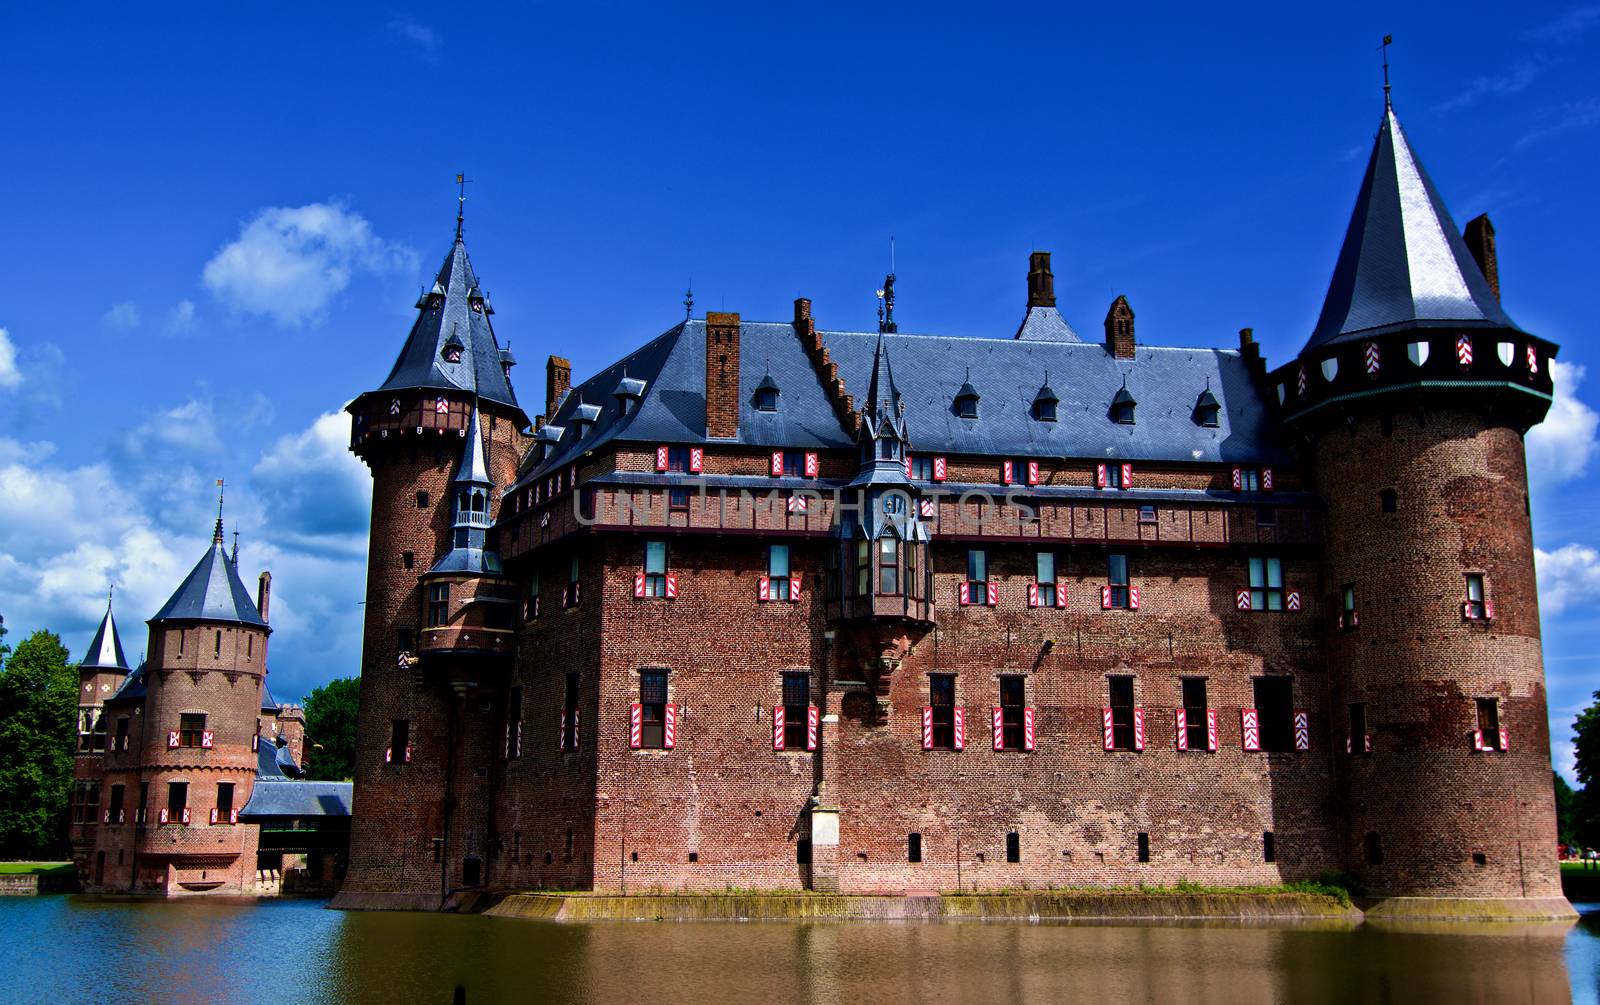 Medieval Castle De Haar from side of Moat against Blue Sky Outdoors. Utrecht, Netherlands